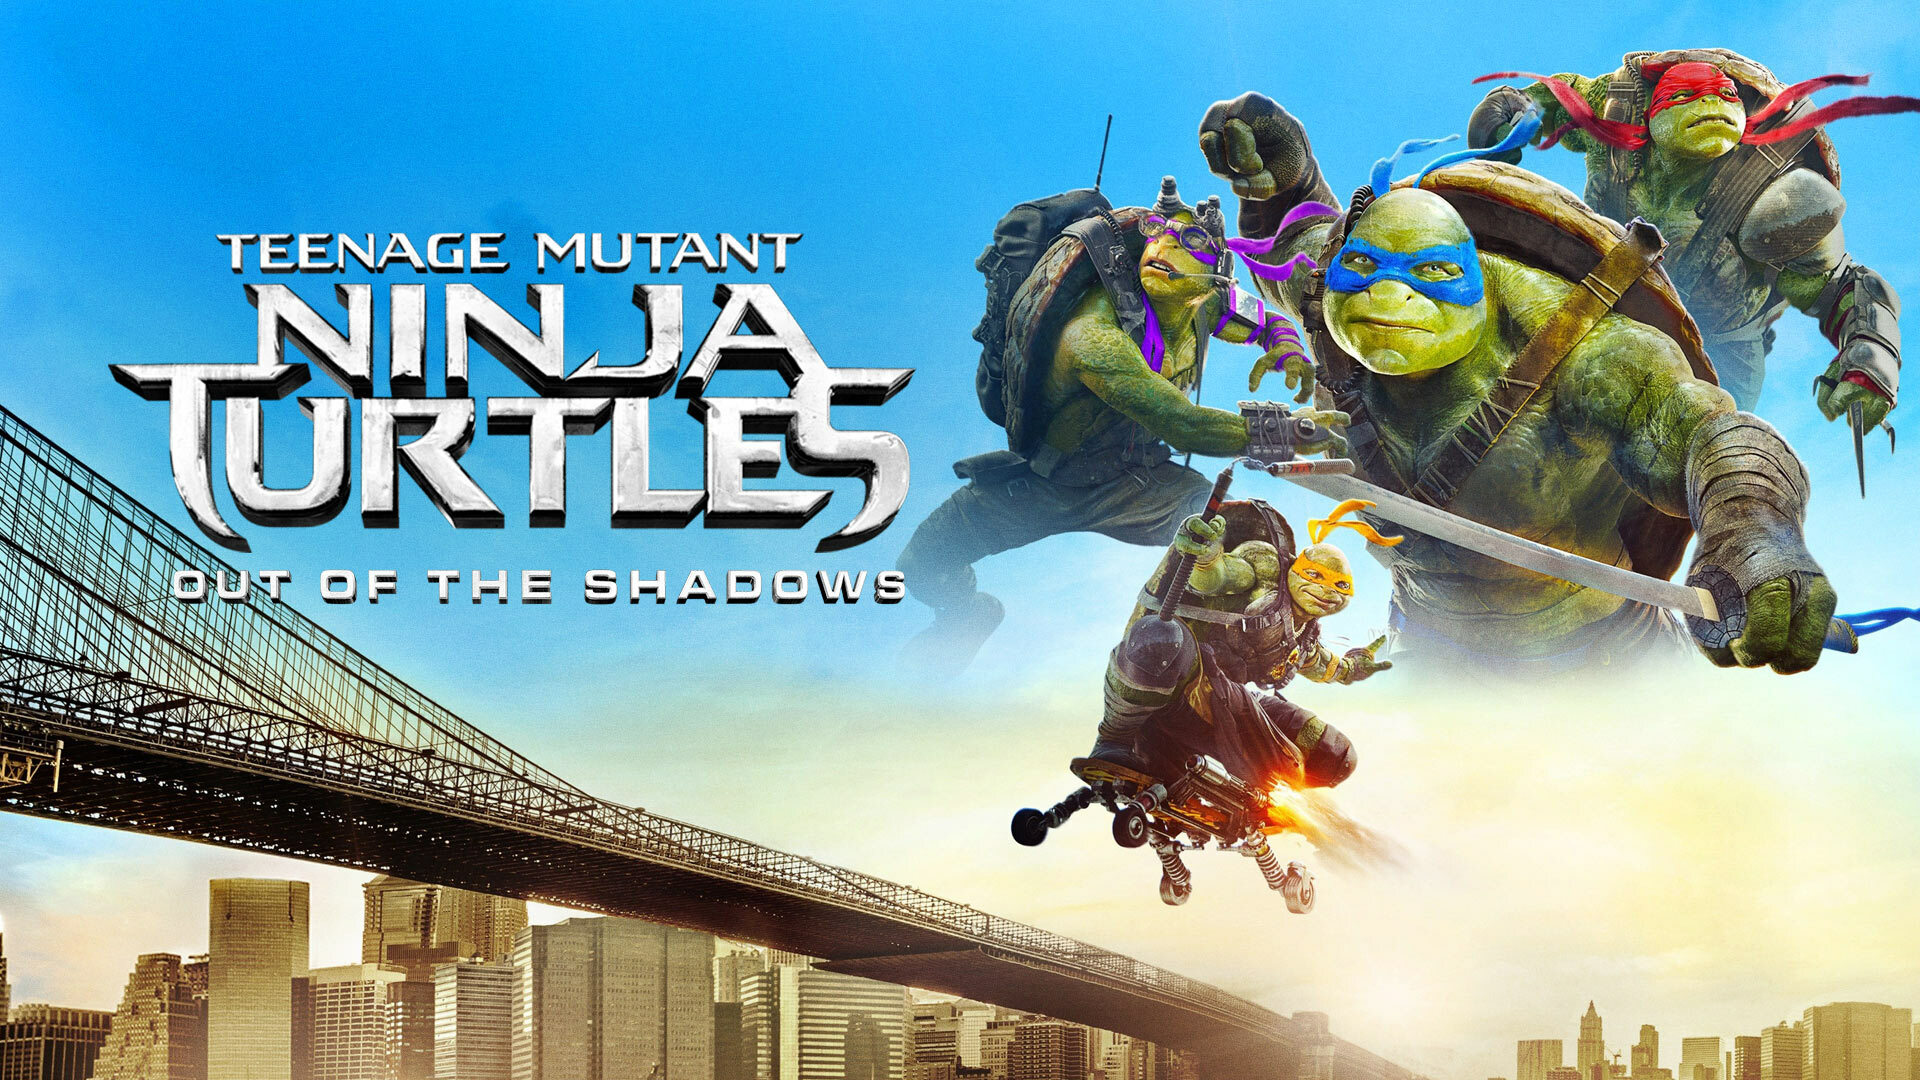 Teenage Mutant Ninja Turtles: Out of the Shadows - Watch Full